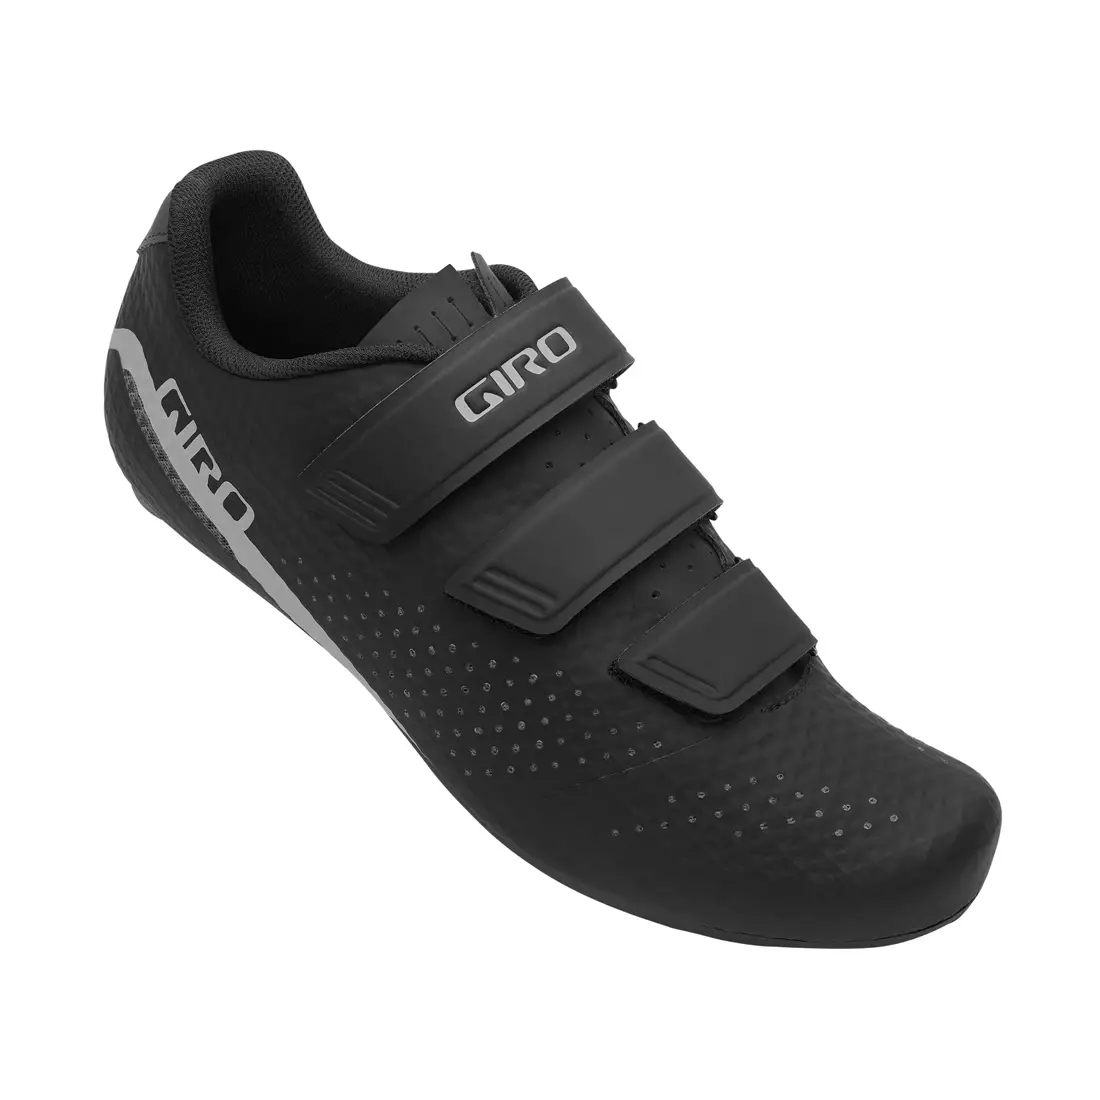 GIRO pánska cyklistická obuv STYLUS black  